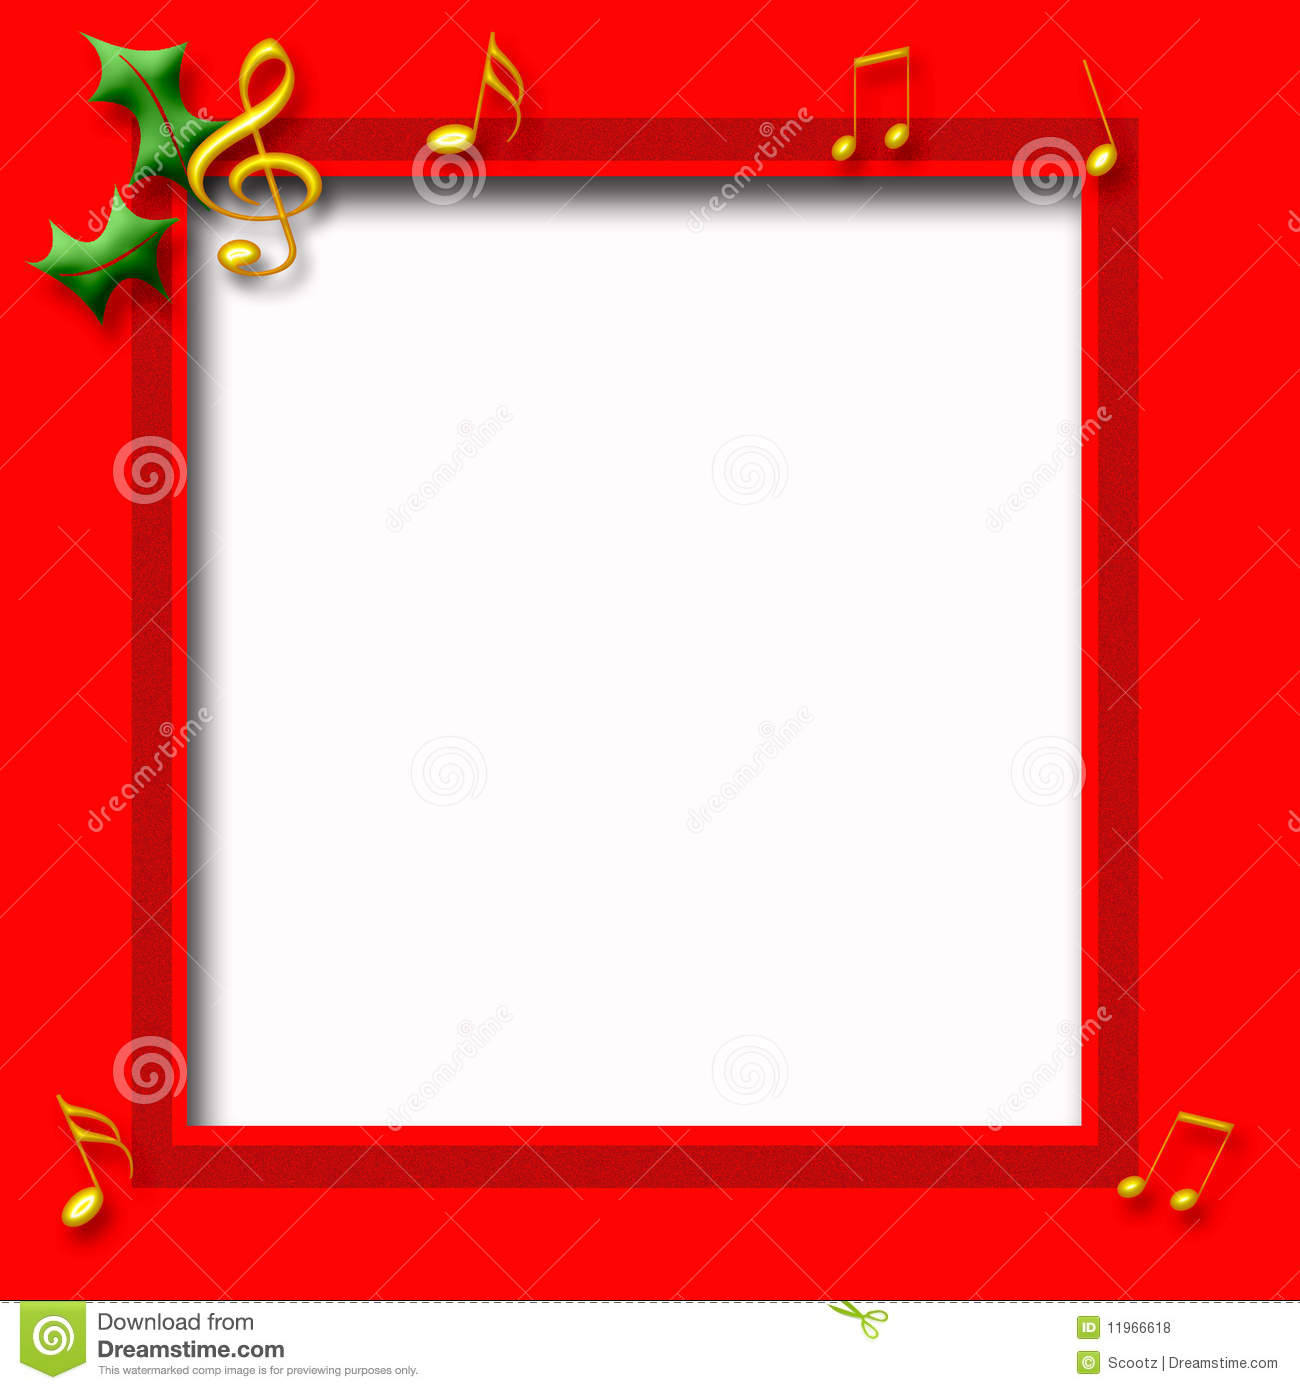 Christmas Music Poster Royalty Free Stock Photos   Image  11966618